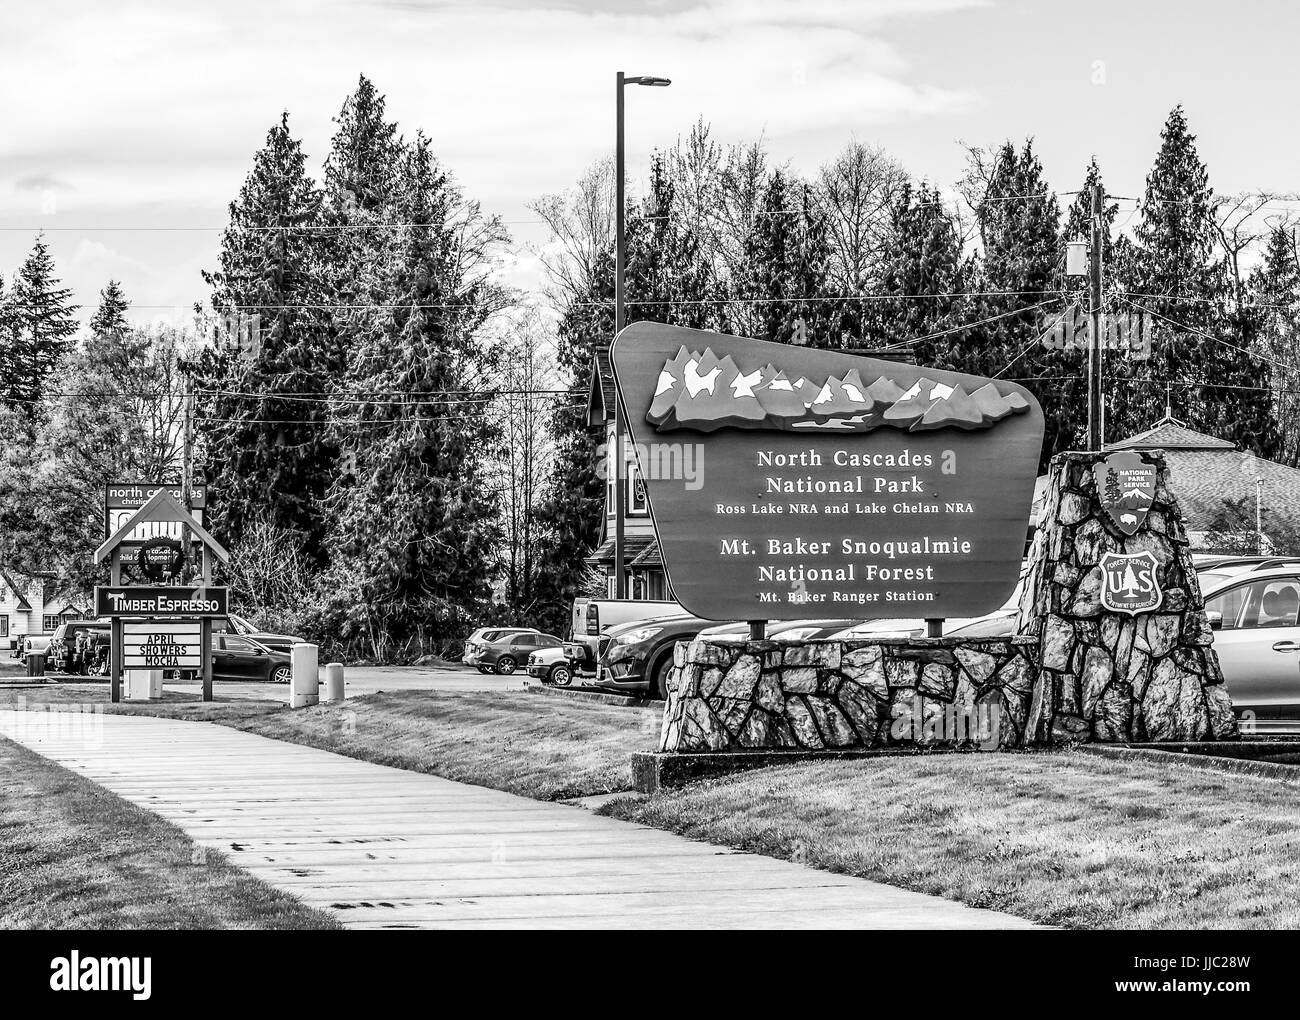 North Cascades National Park Welcome sign - NORTH CASCADES - WASHINGTON - APRIL 11, 2017 Stock Photo